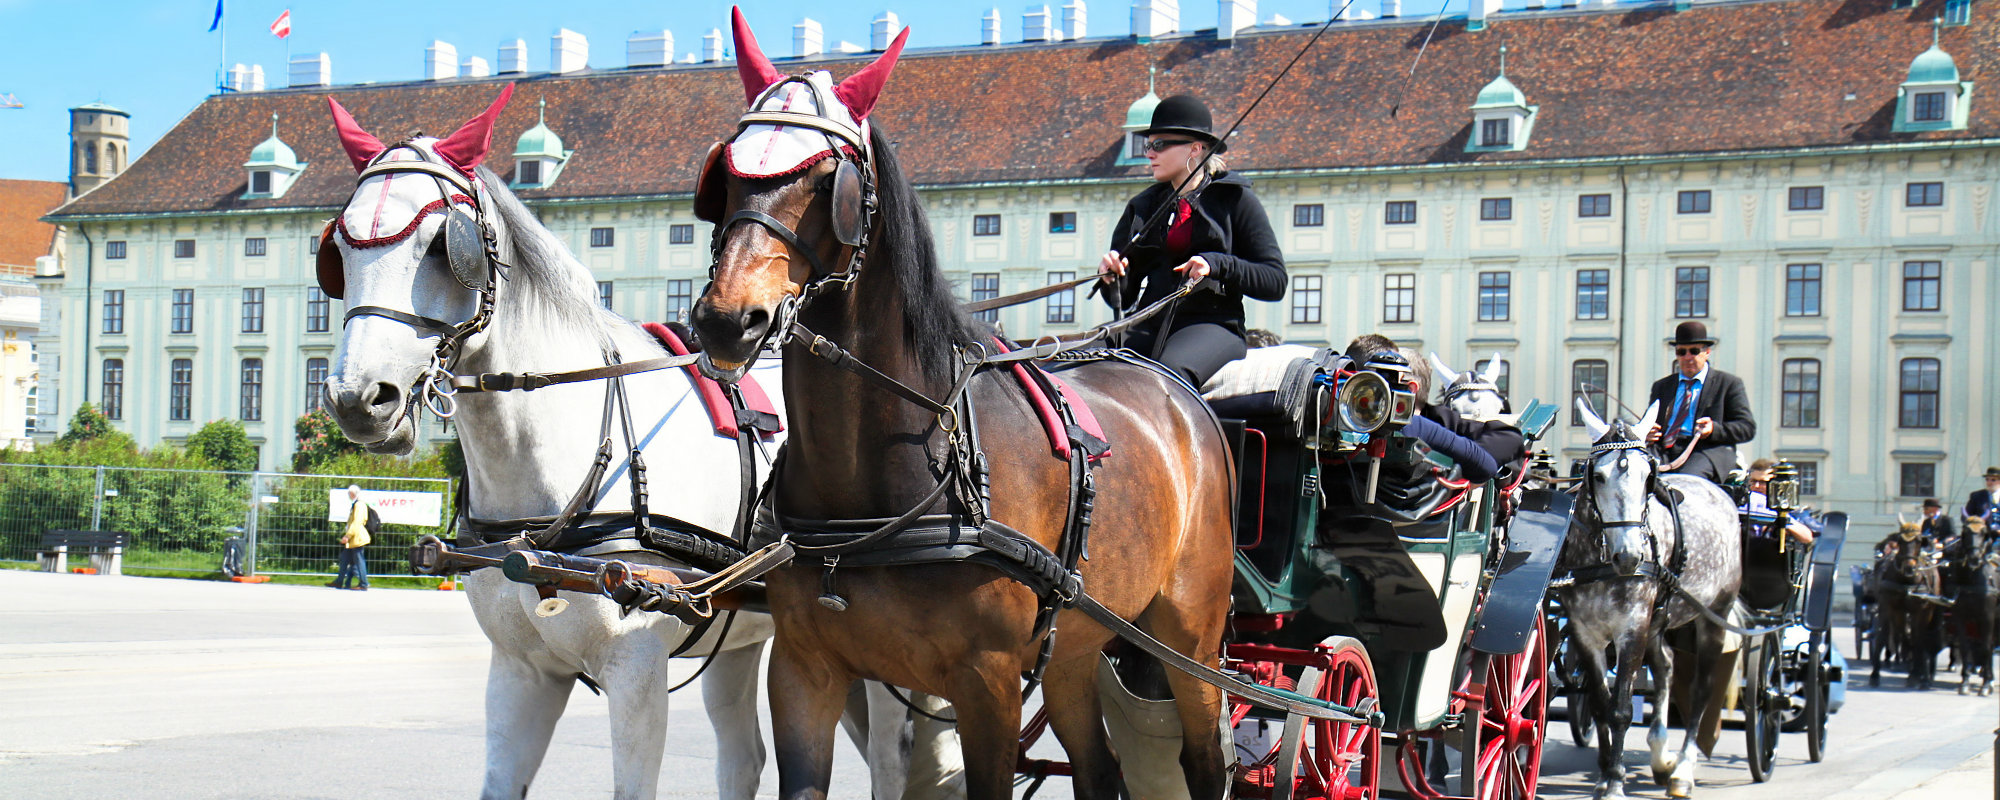 Horse carriagesA